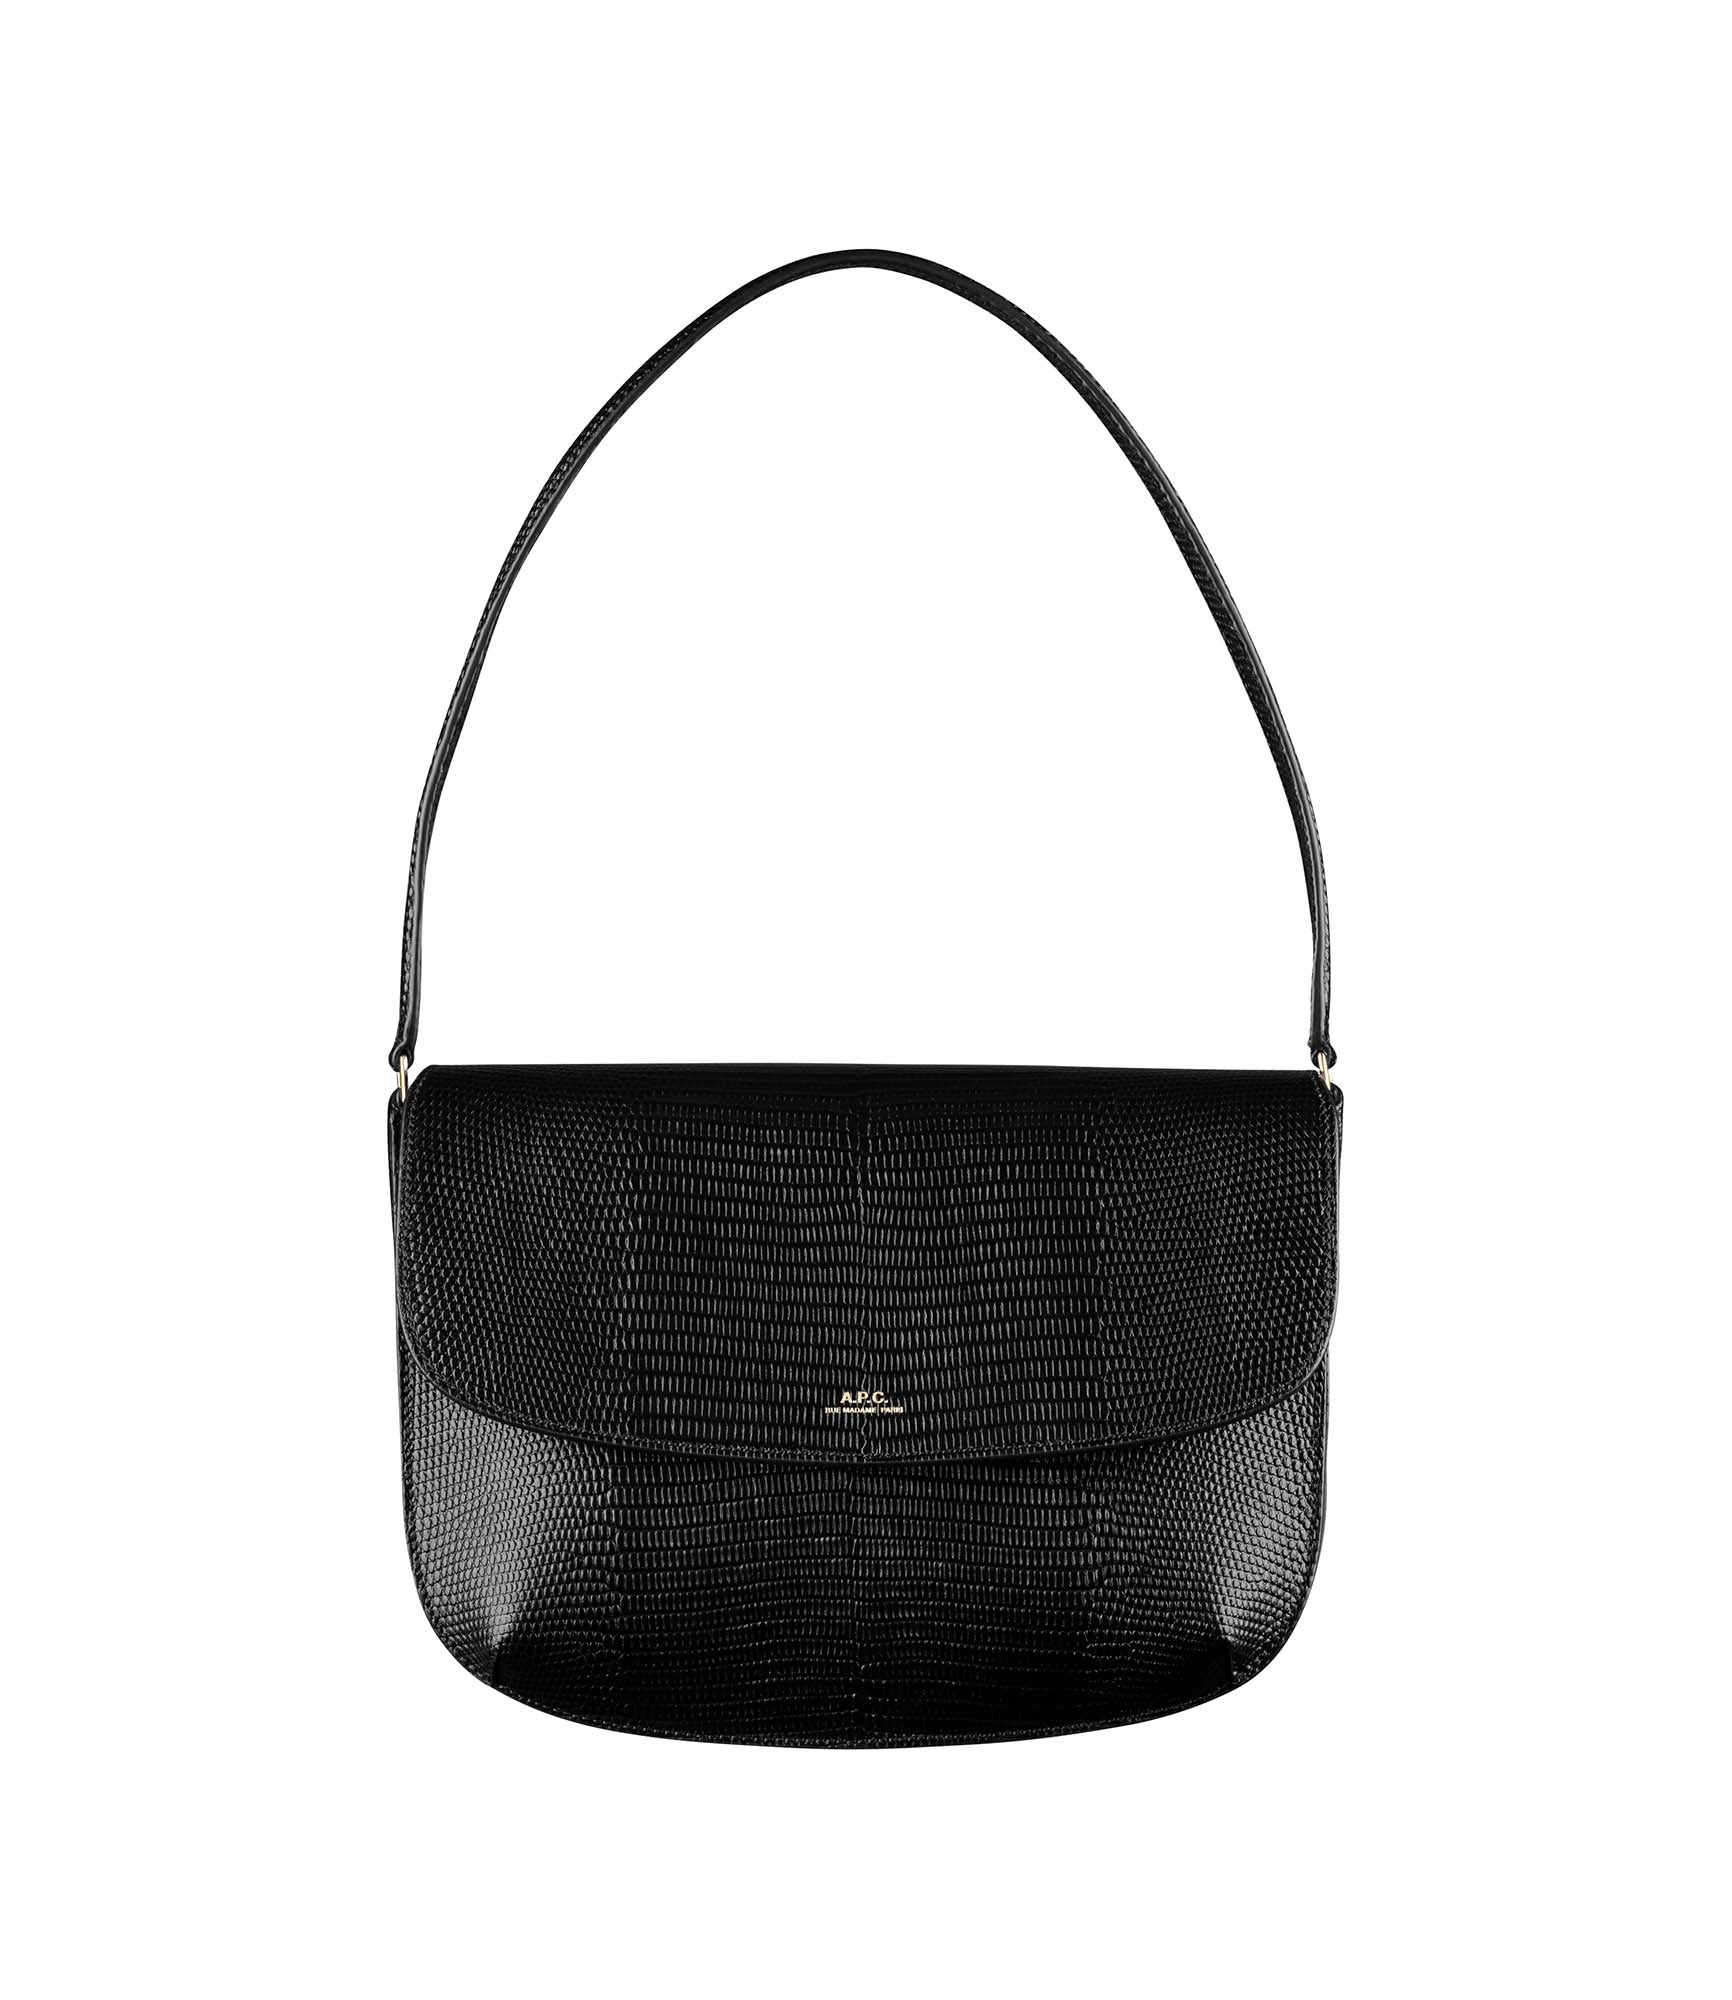 Sarah Shoulder bag | Bag in lizard-embossed leather with flap